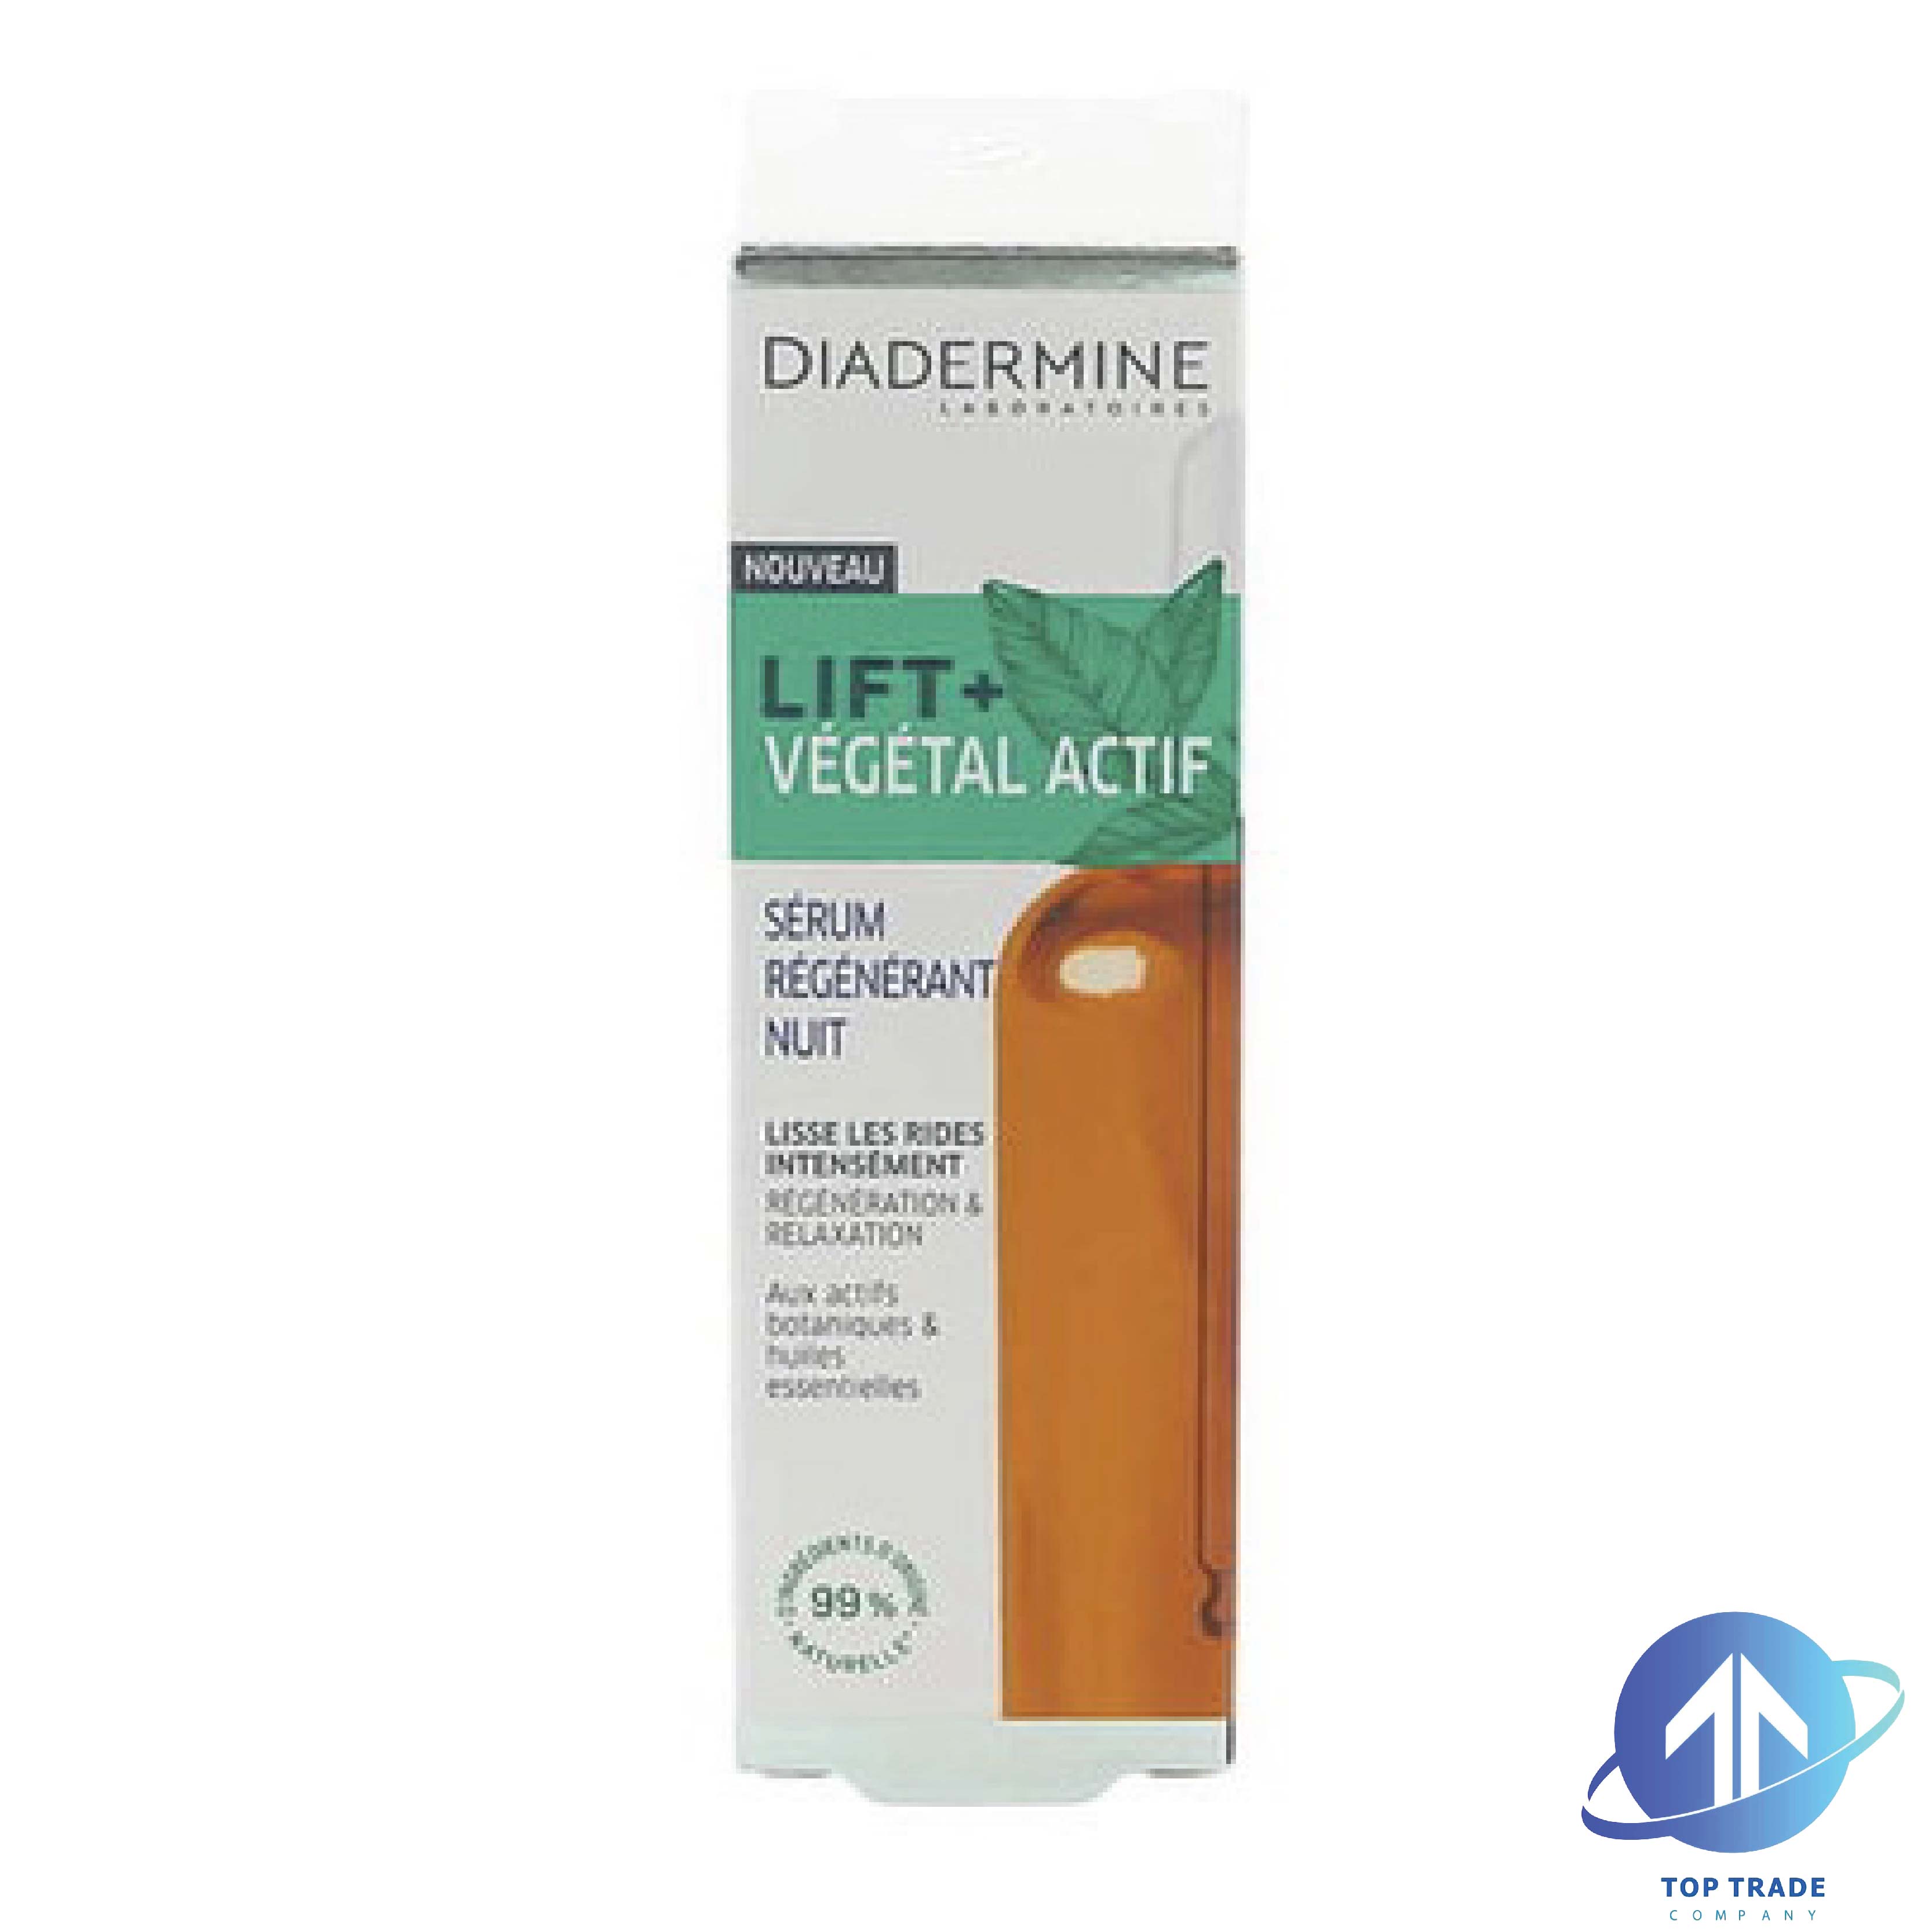 Diadermine Lift+ Végétal Actif regenerating night serum